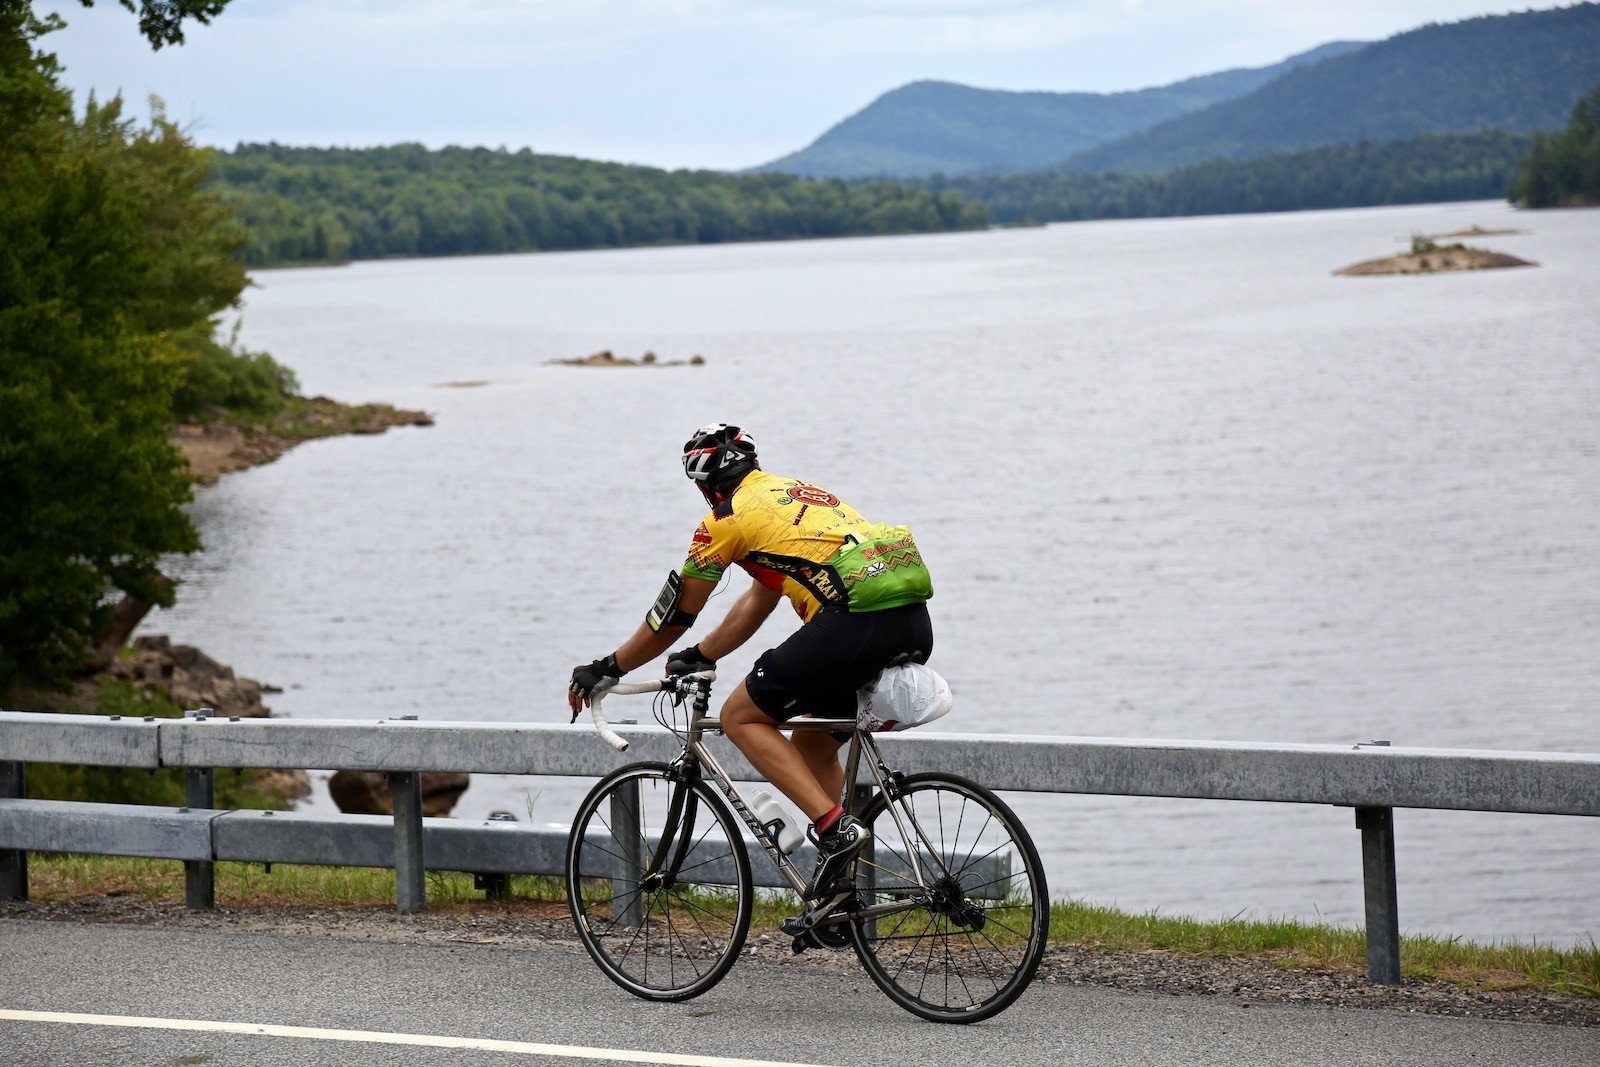 The ididaride! A 75-mile Bike Tour of the Adirondack Park - Pure Adirondacks